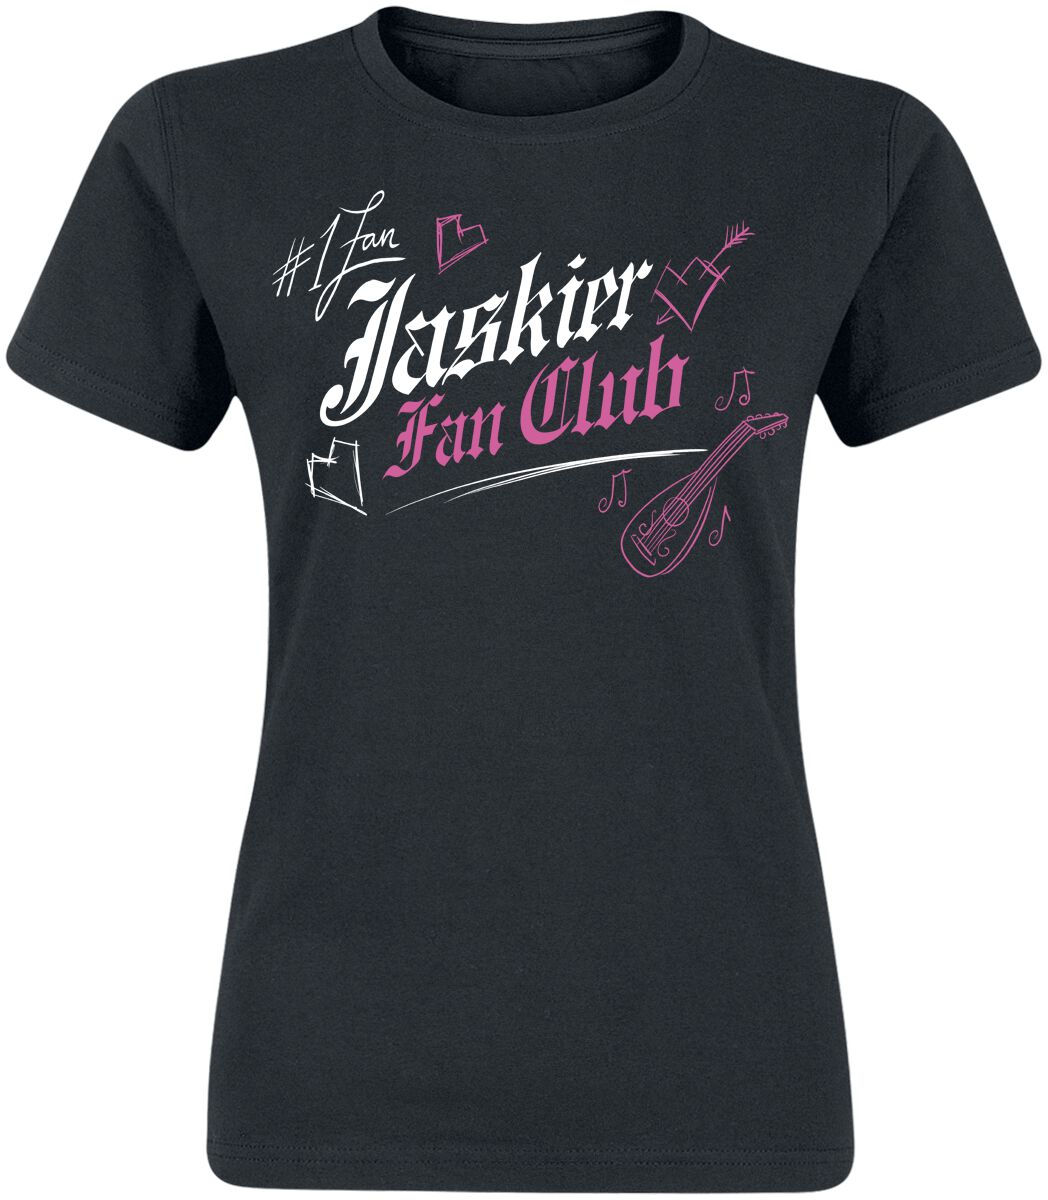 The Witcher Jaskier Fan Club T-Shirt schwarz in S